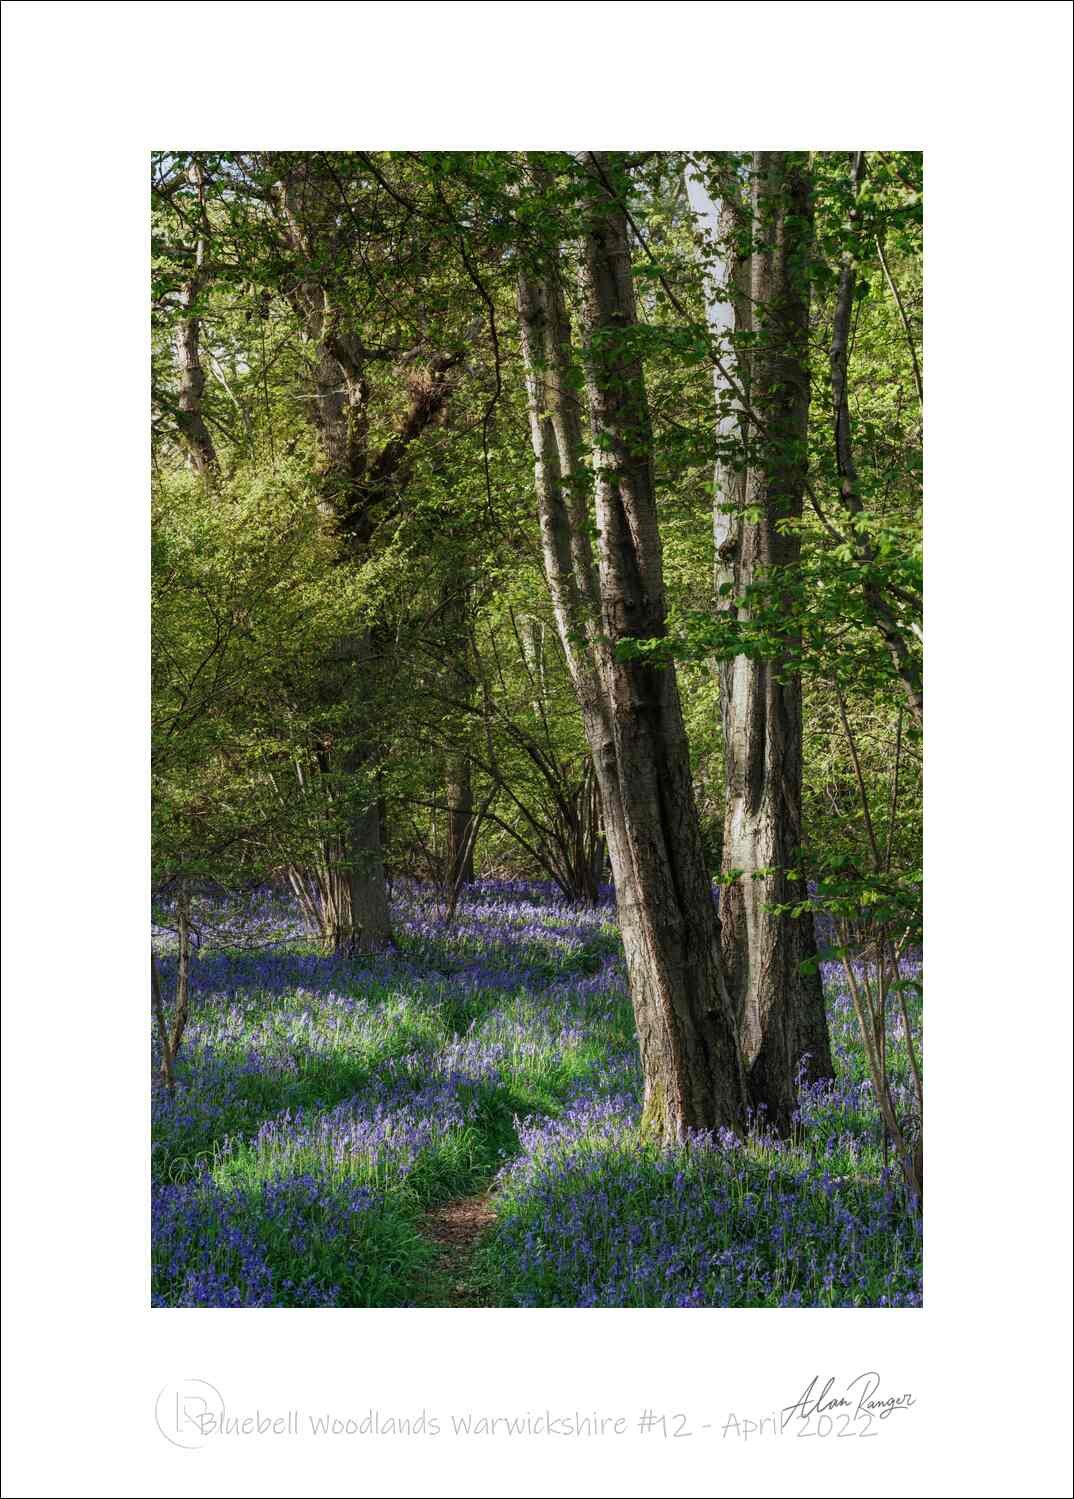 Bluebell Woodlands Warwickshire #12 - April 2022.jpg